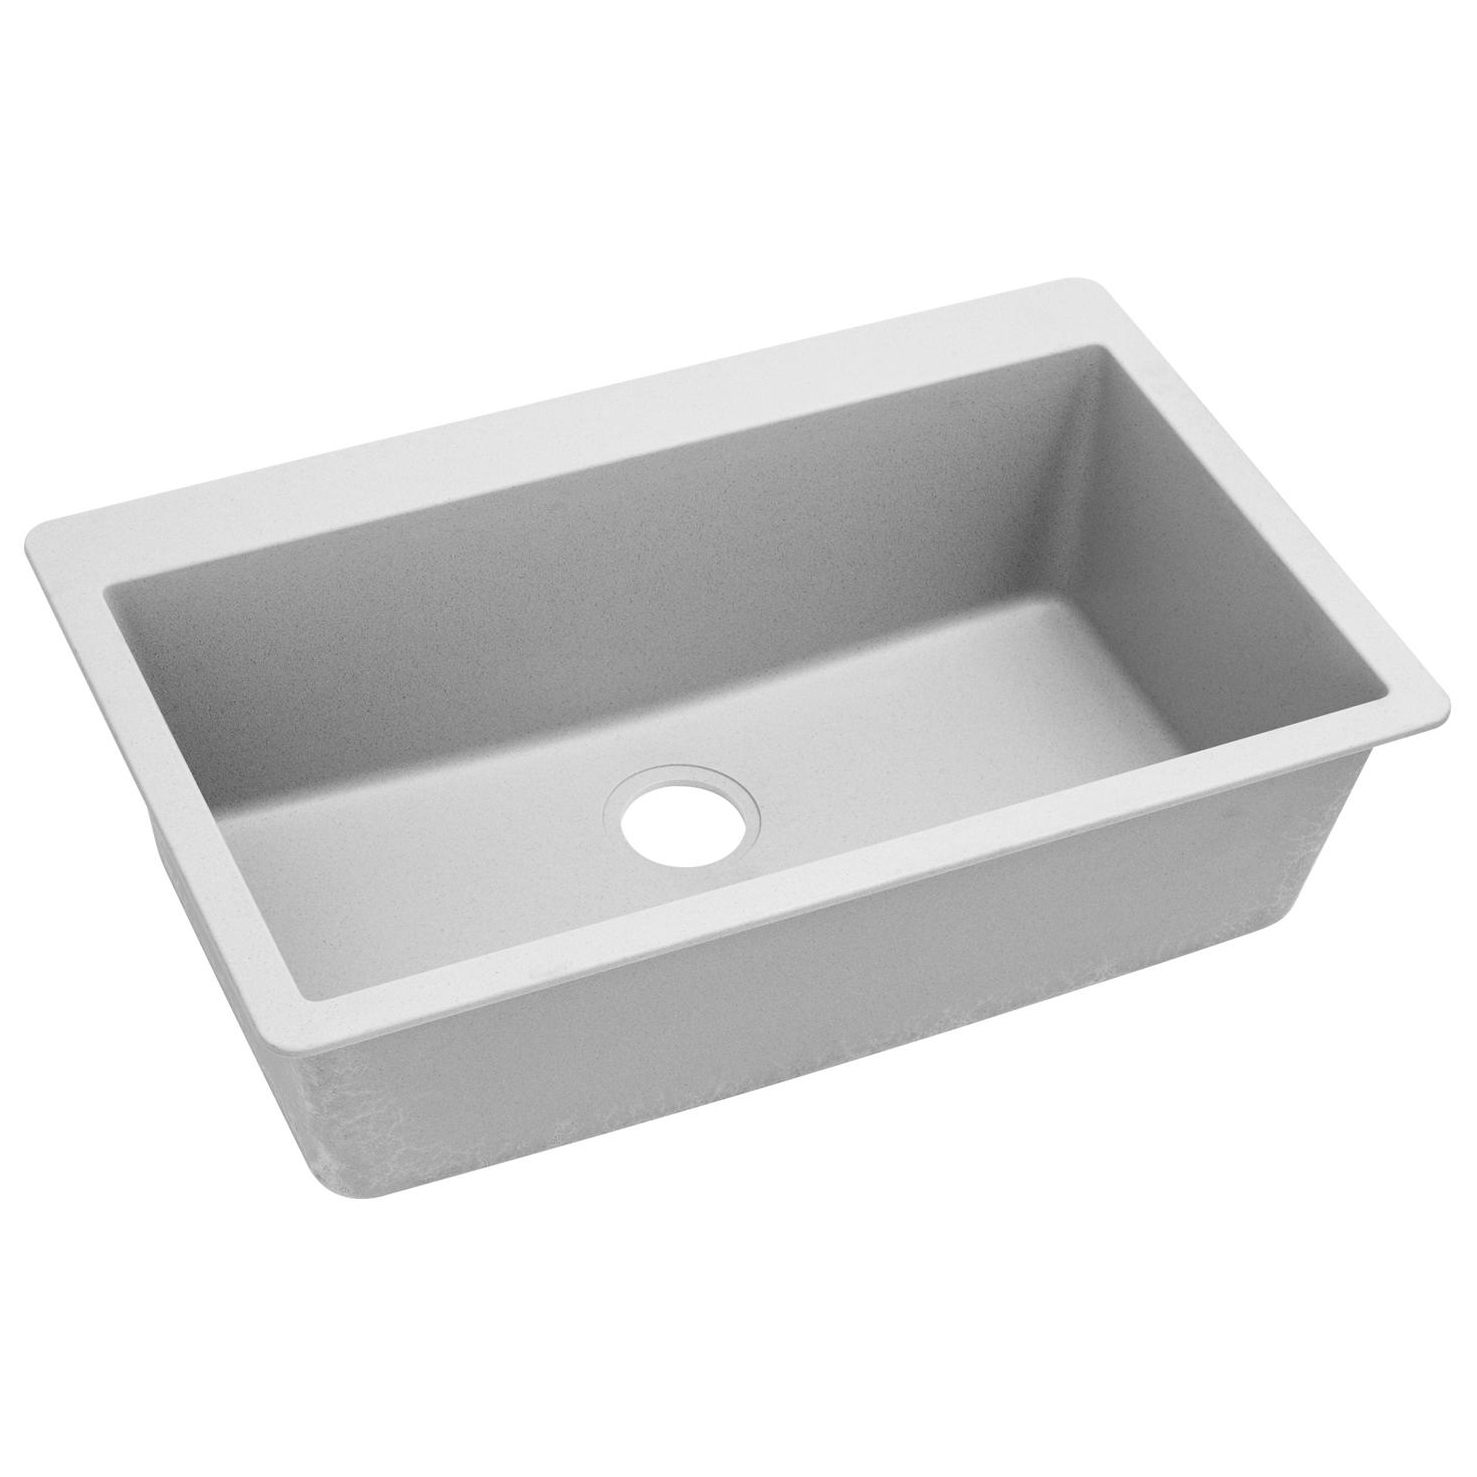 Quartz Classic 33x20-7/8x9-7/16" Single Bowl Sink in White